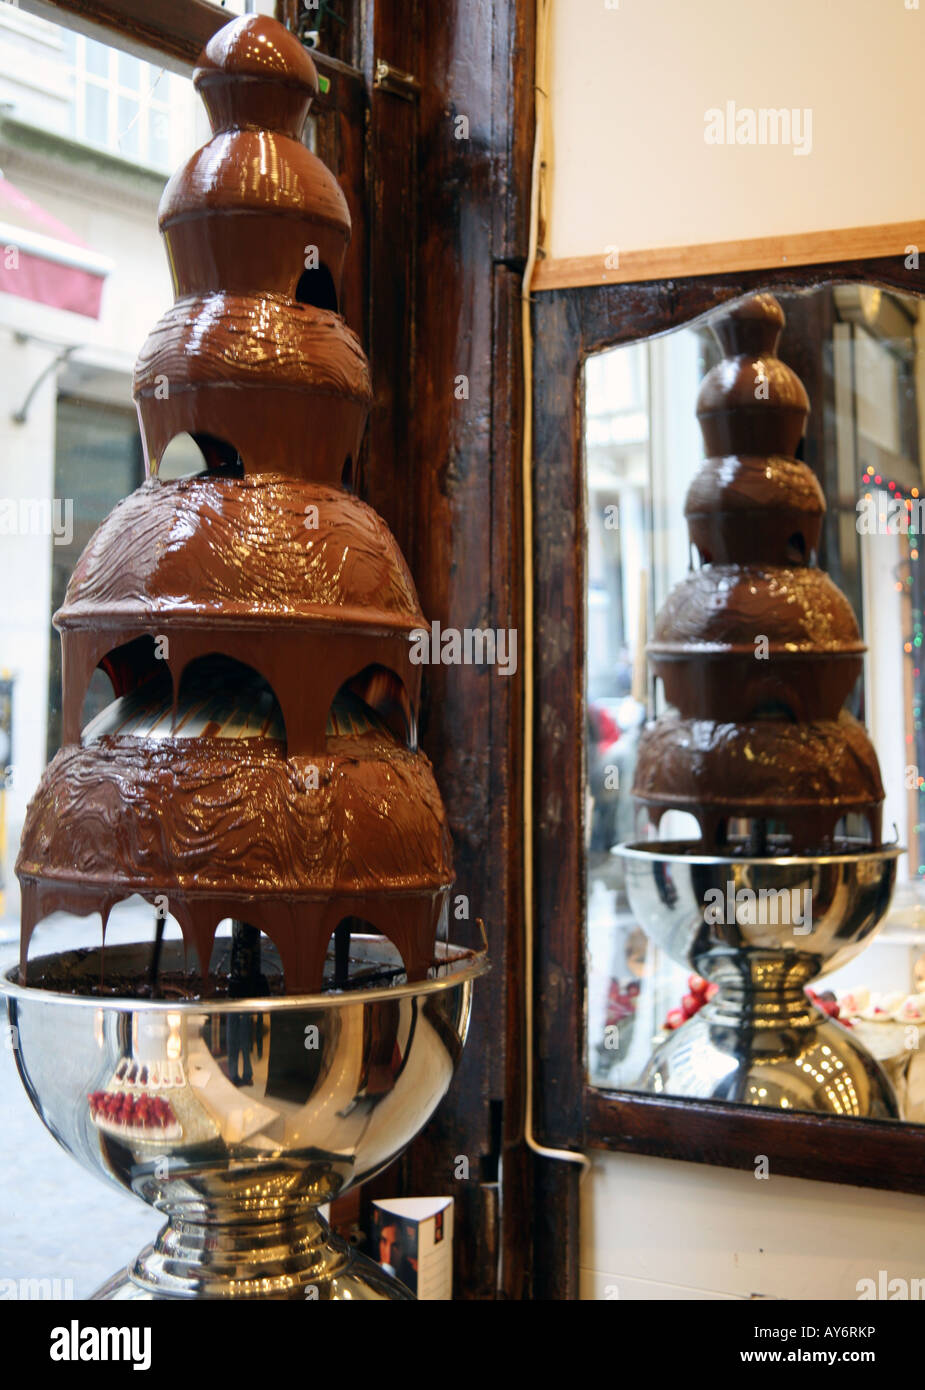 Fontana di cioccolato a Bruxelles shop Foto stock - Alamy